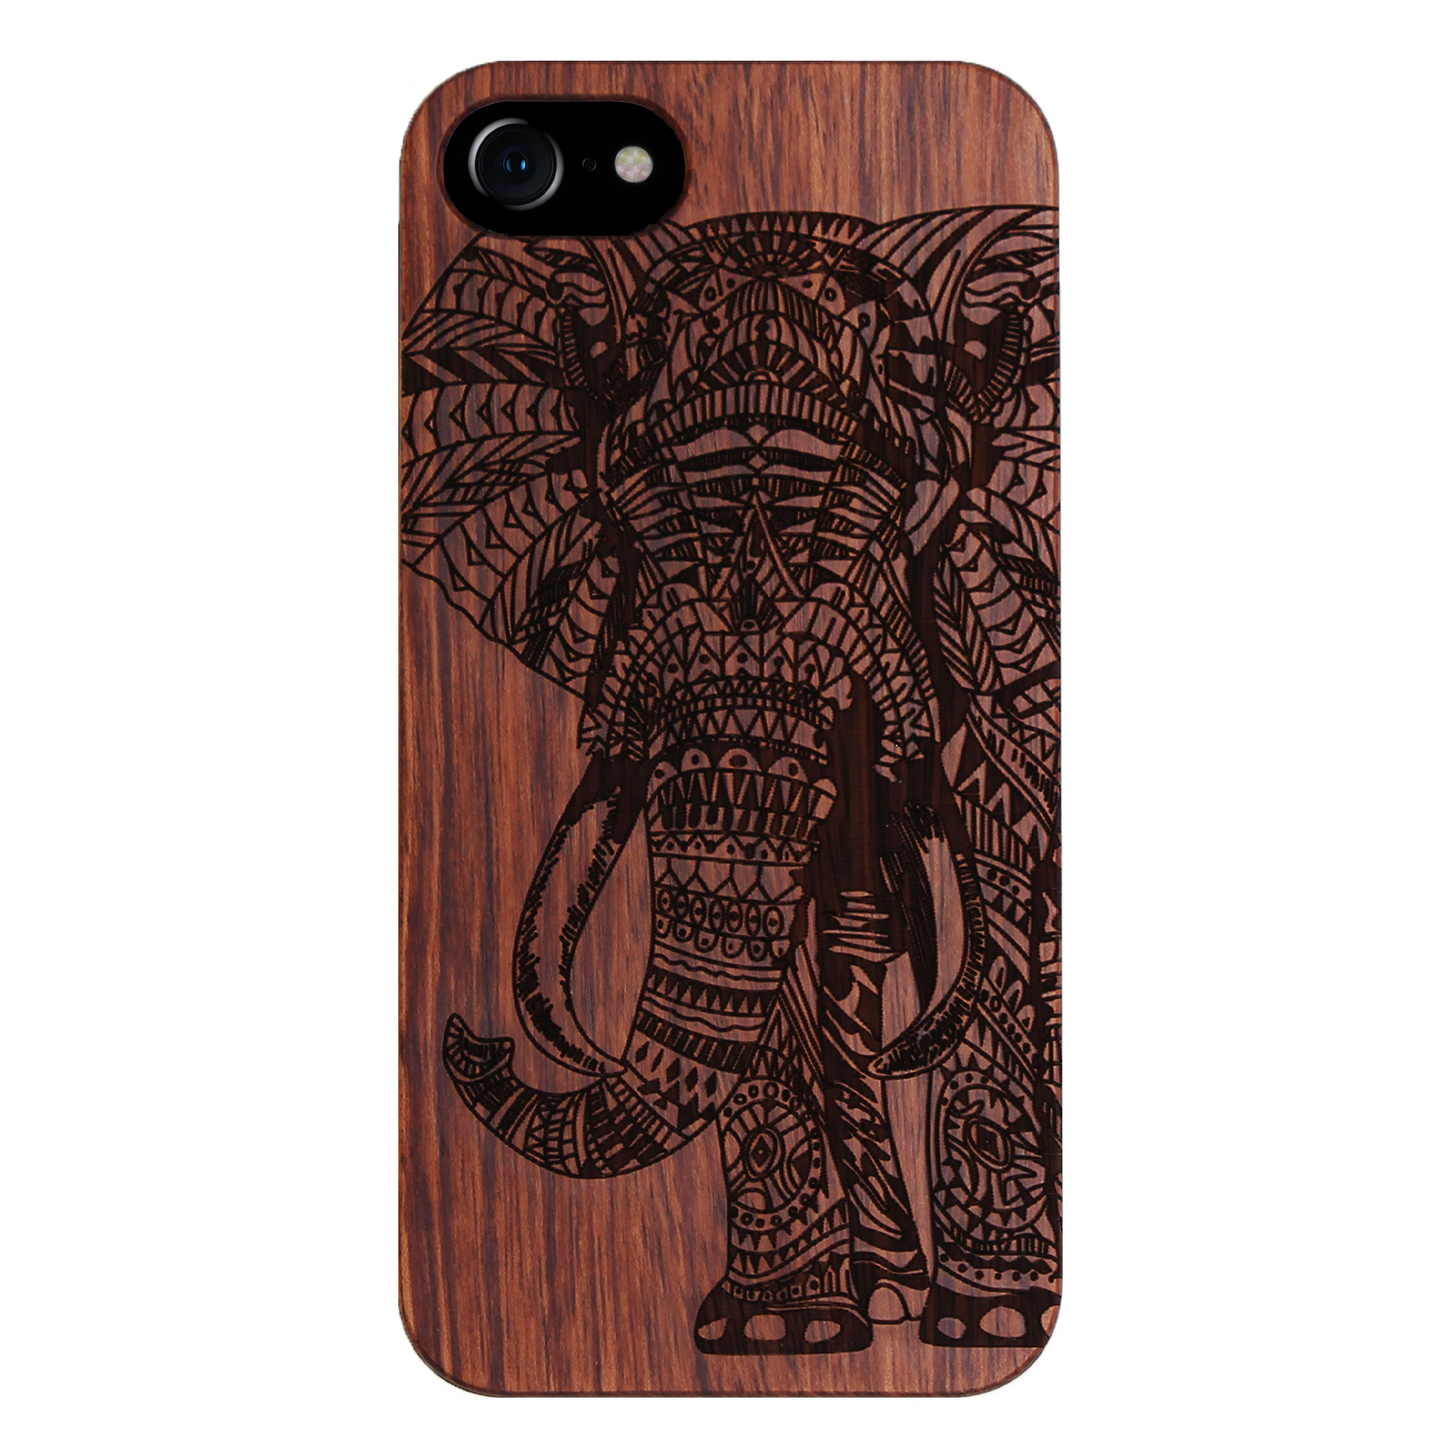 Elephant Eden case made of rosewood